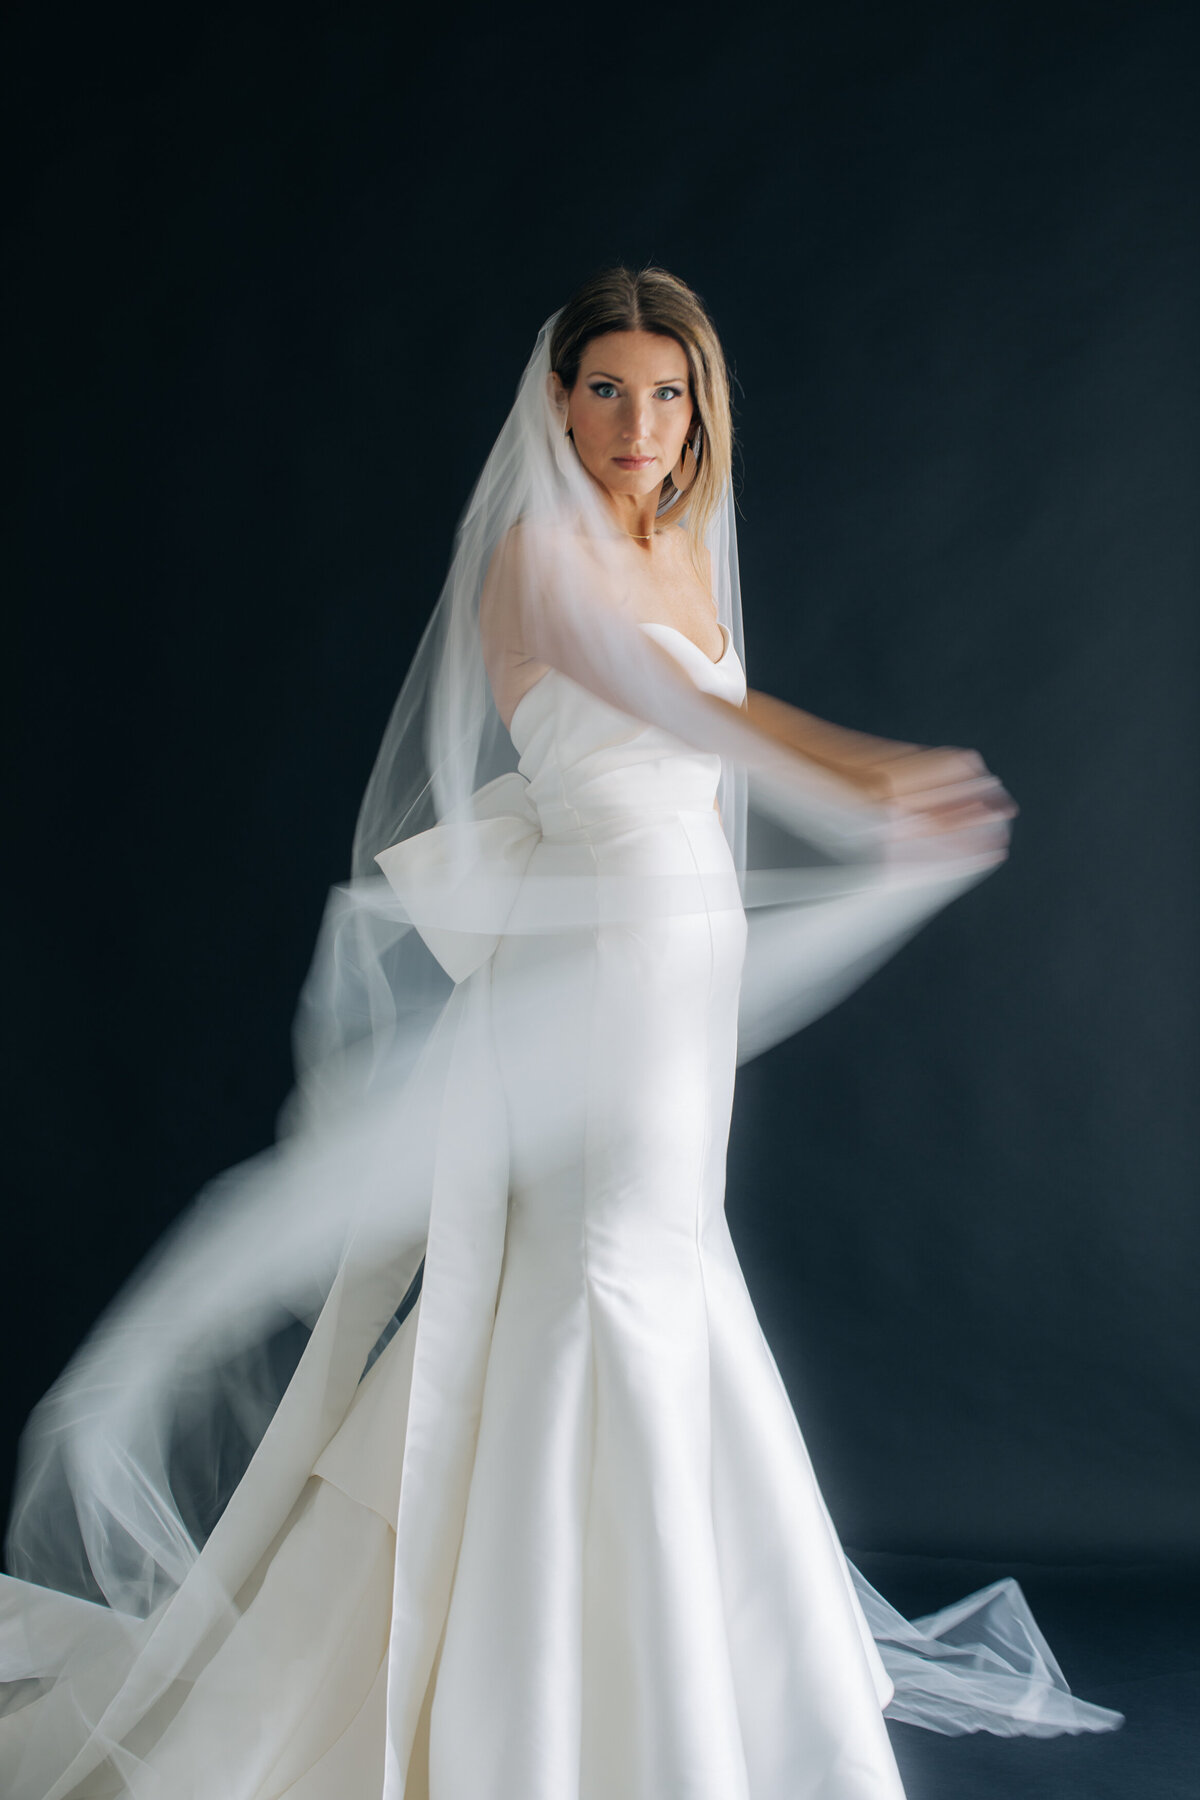 Woman in wedding dress twirling her veil.